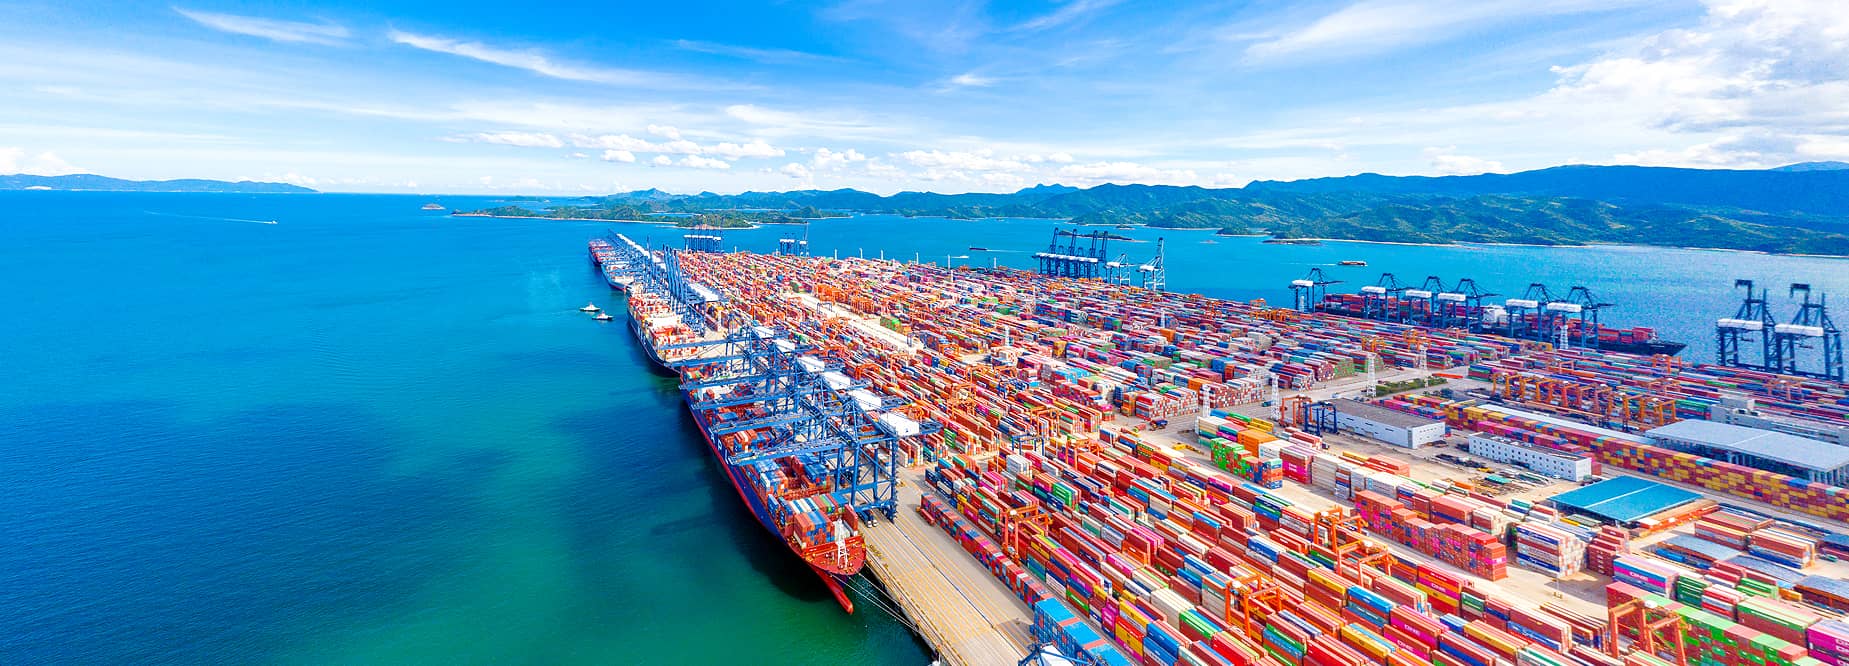 Shenzhen COVID lockdown will add pressure to global supply chains